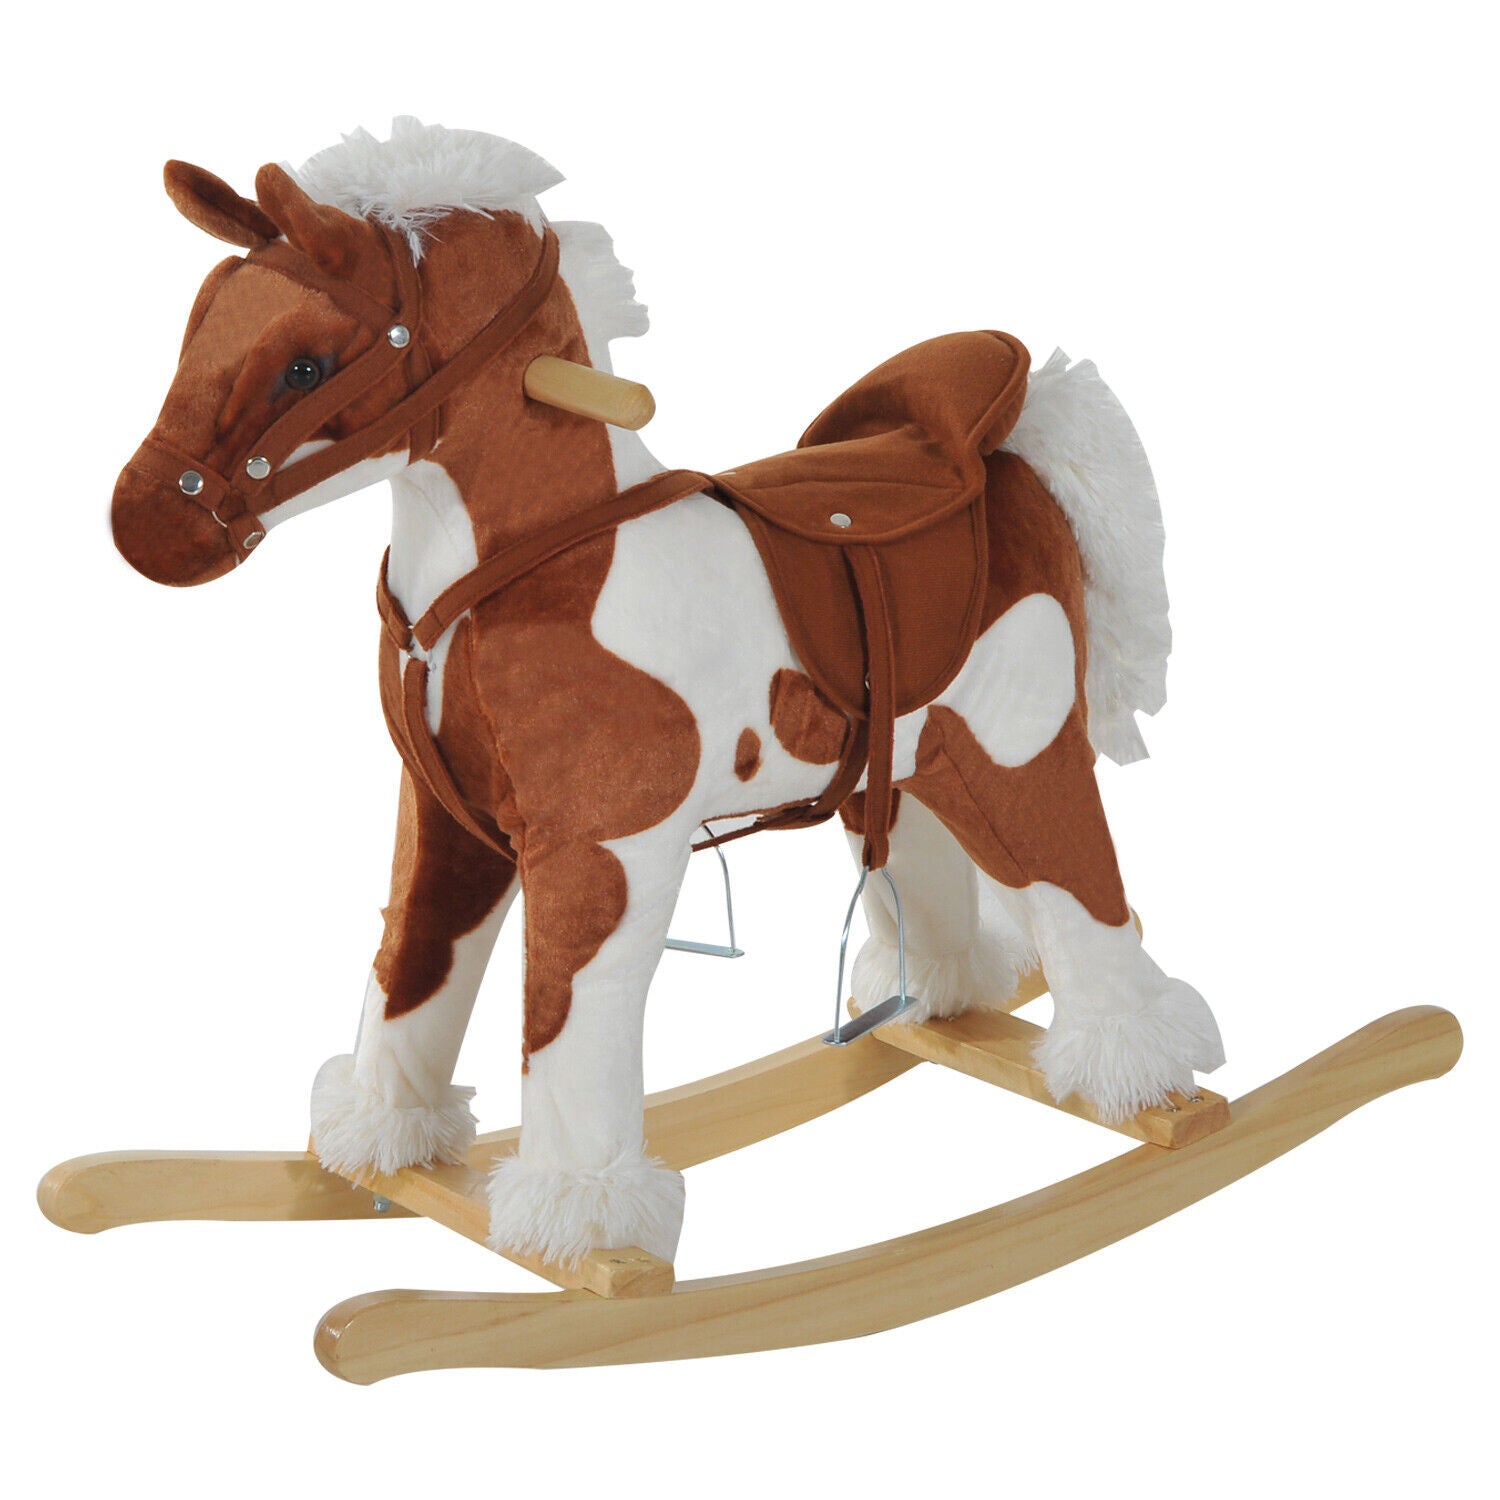 Premium Rocking Horse For Toddlers